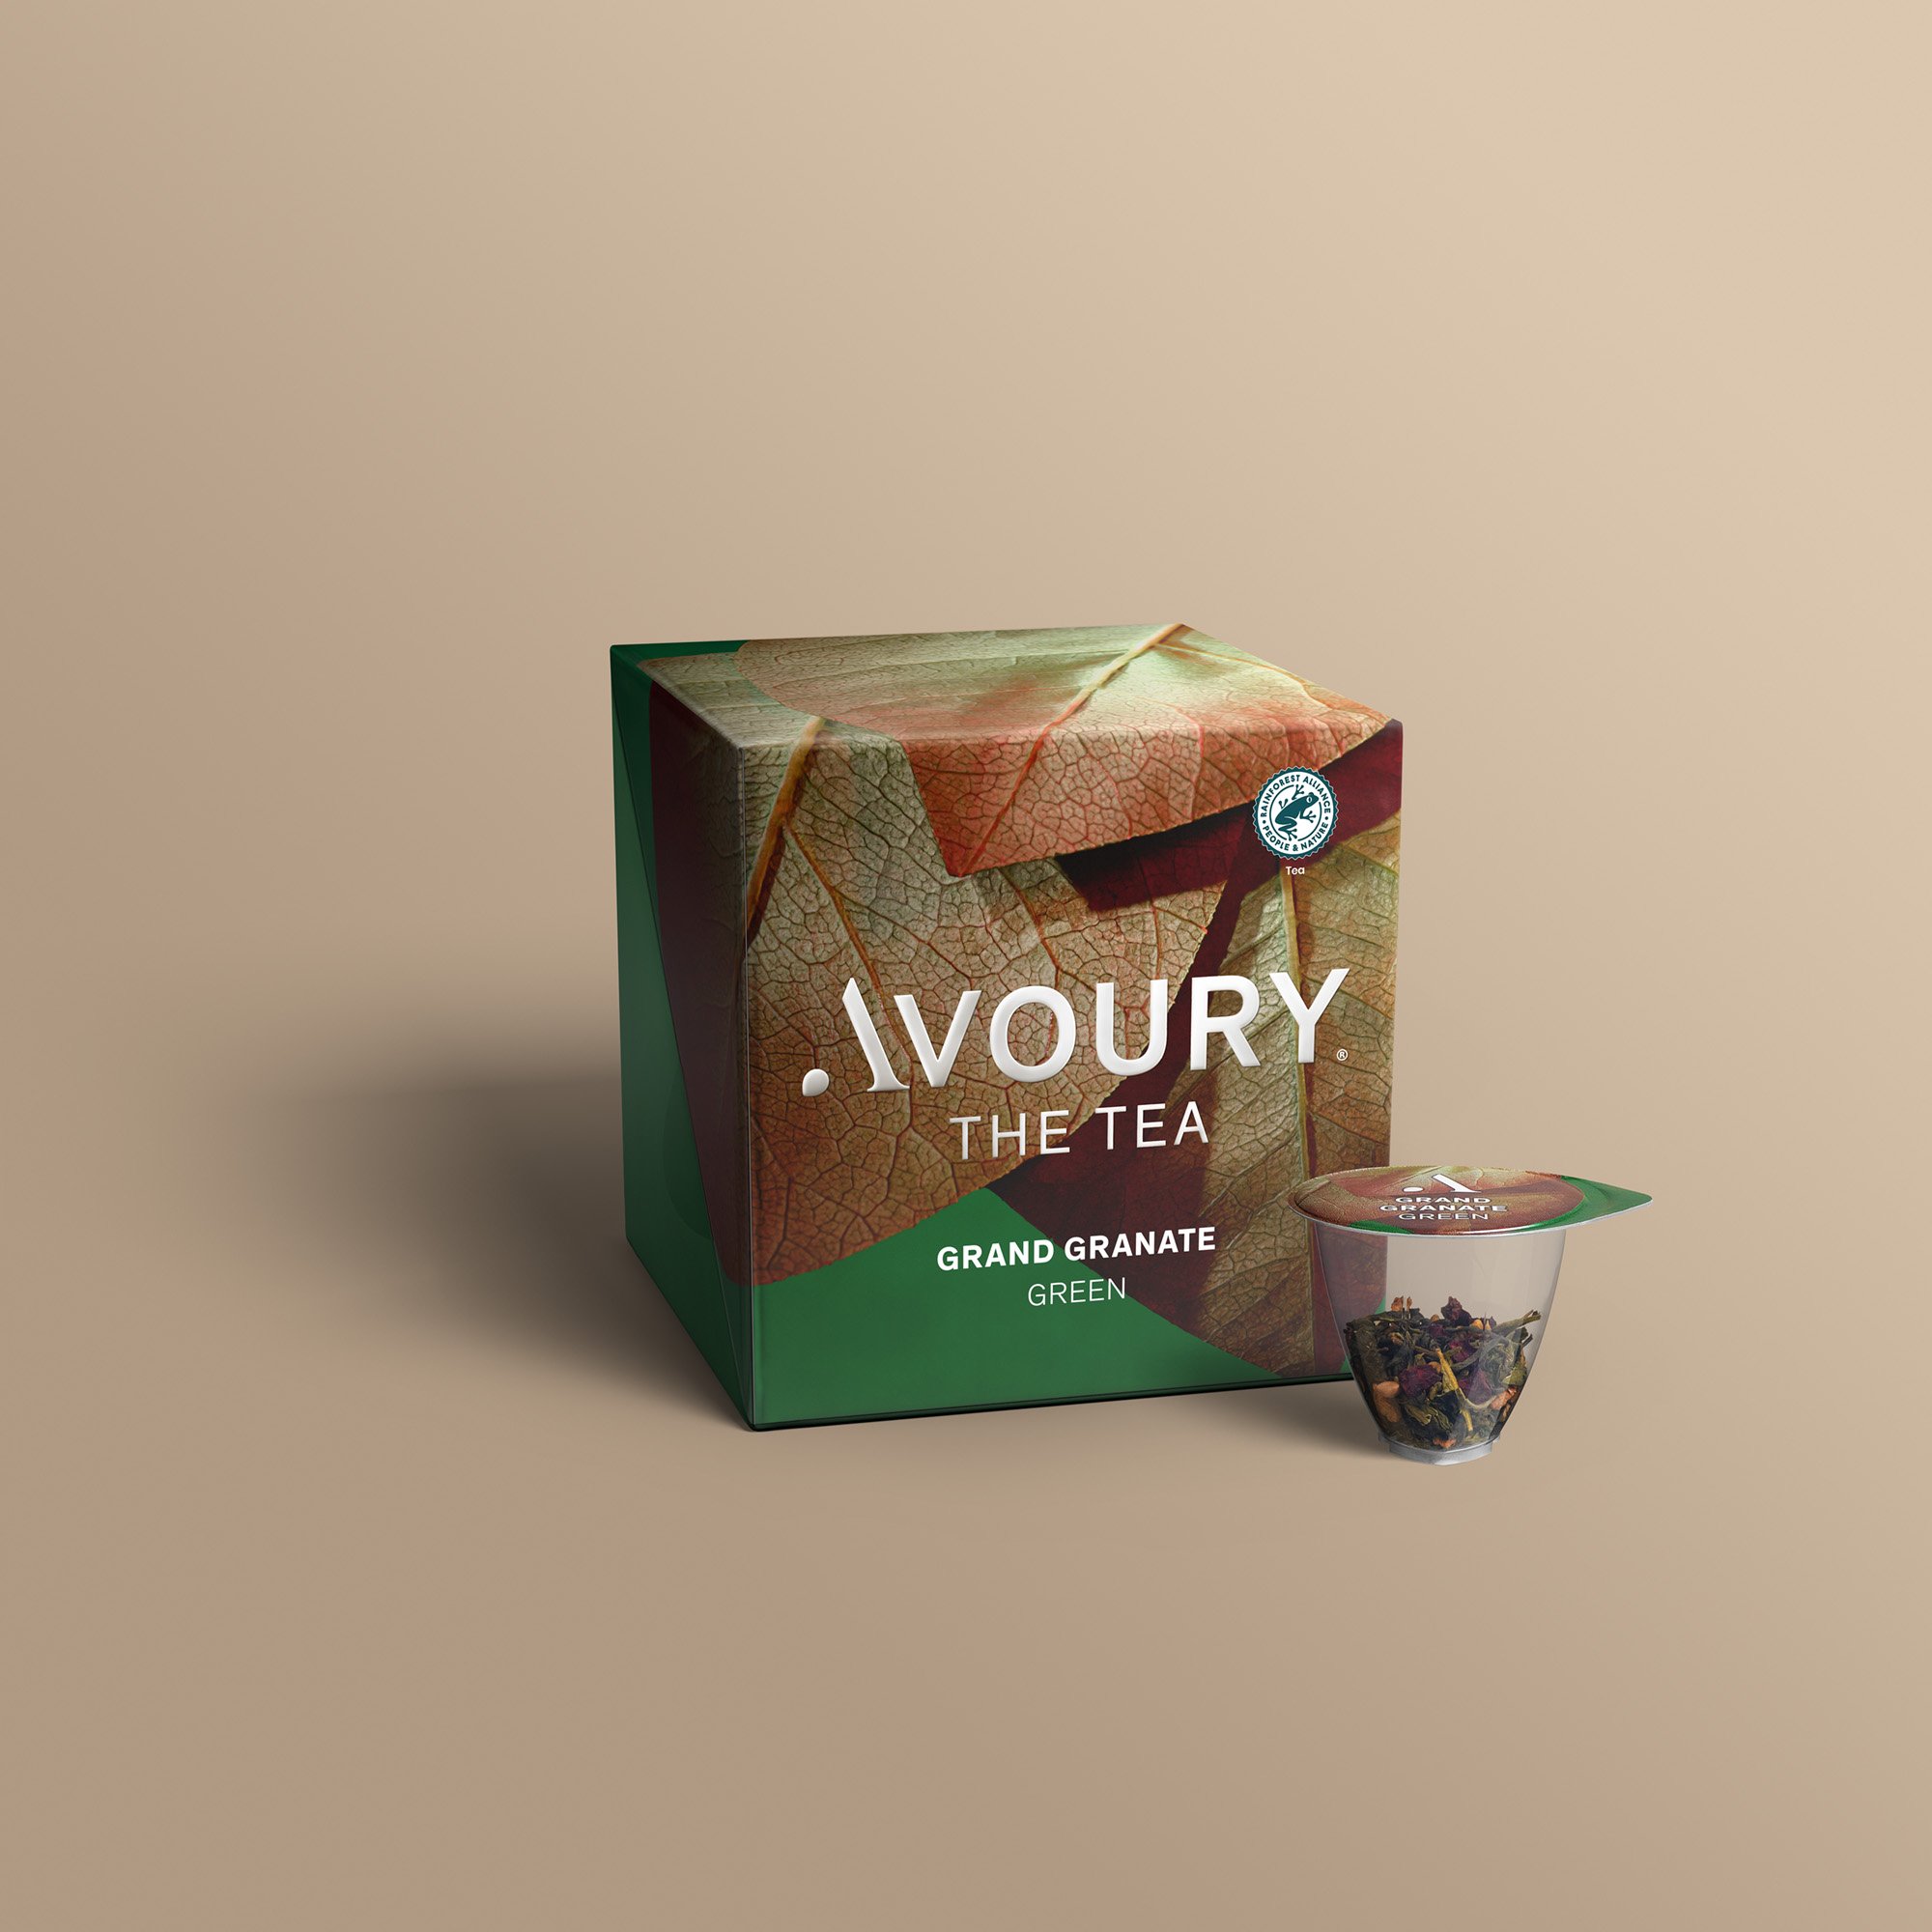 Grand Granate  | Avoury. The Tea.